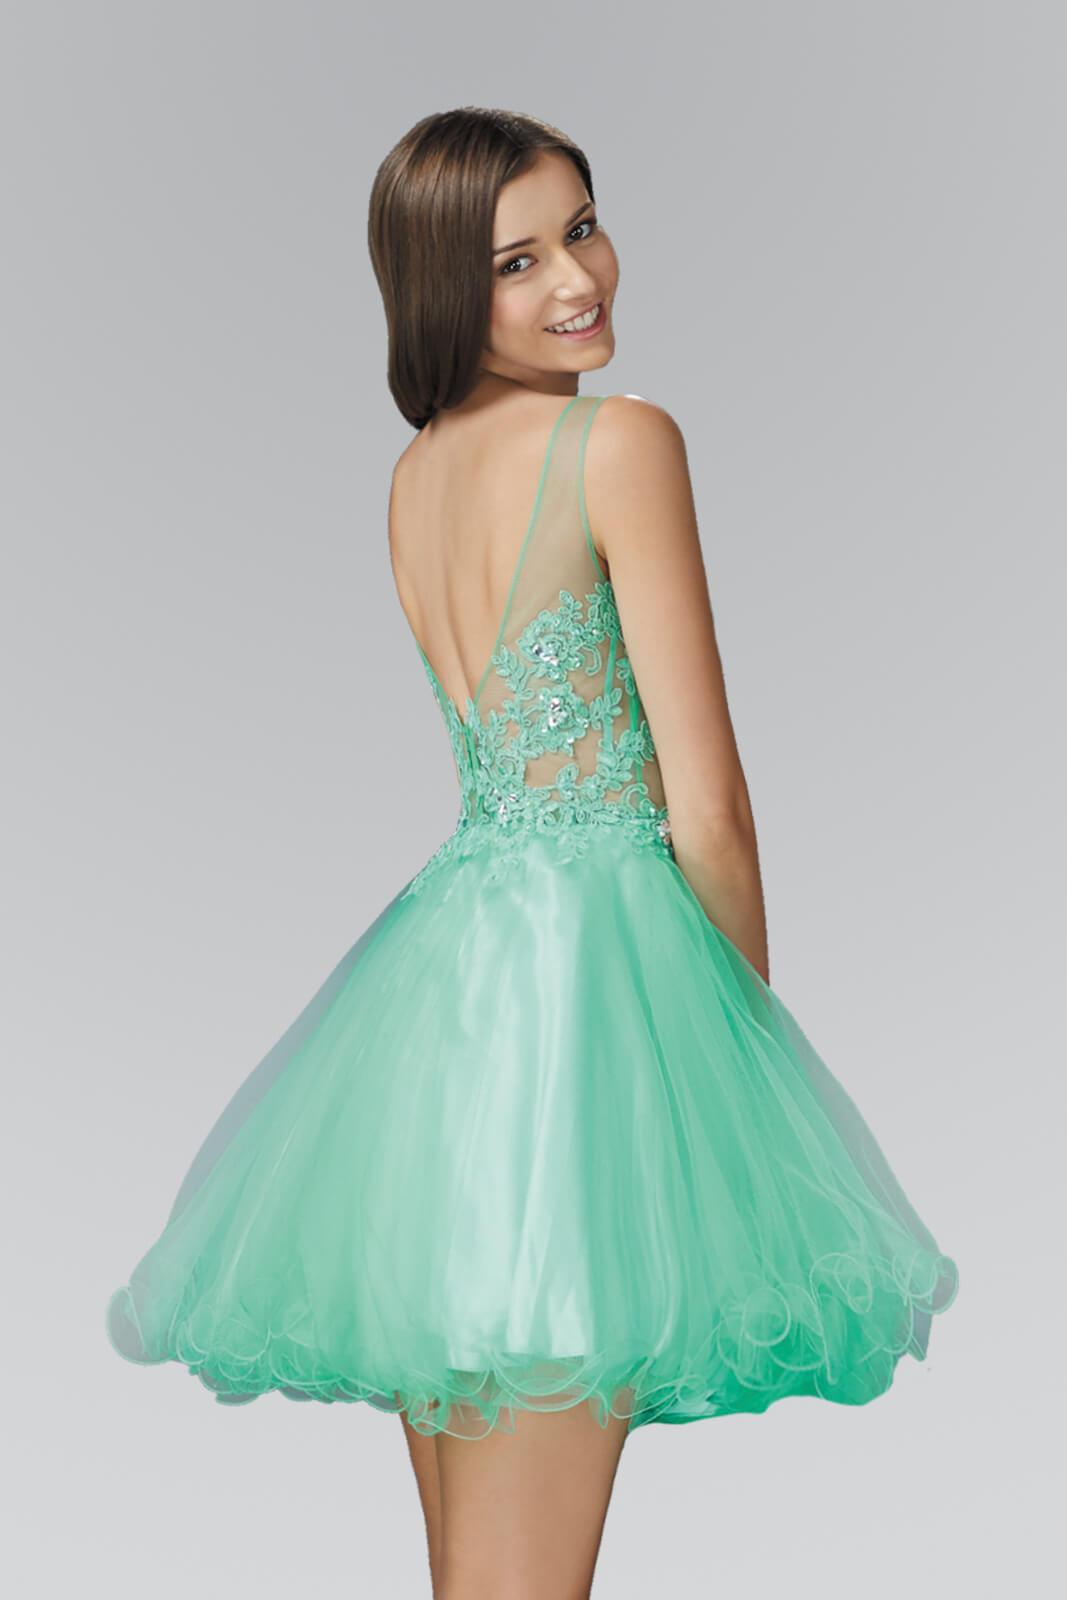 Sleeveless Prom Short Dress Homecoming - The Dress Outlet Elizabeth K